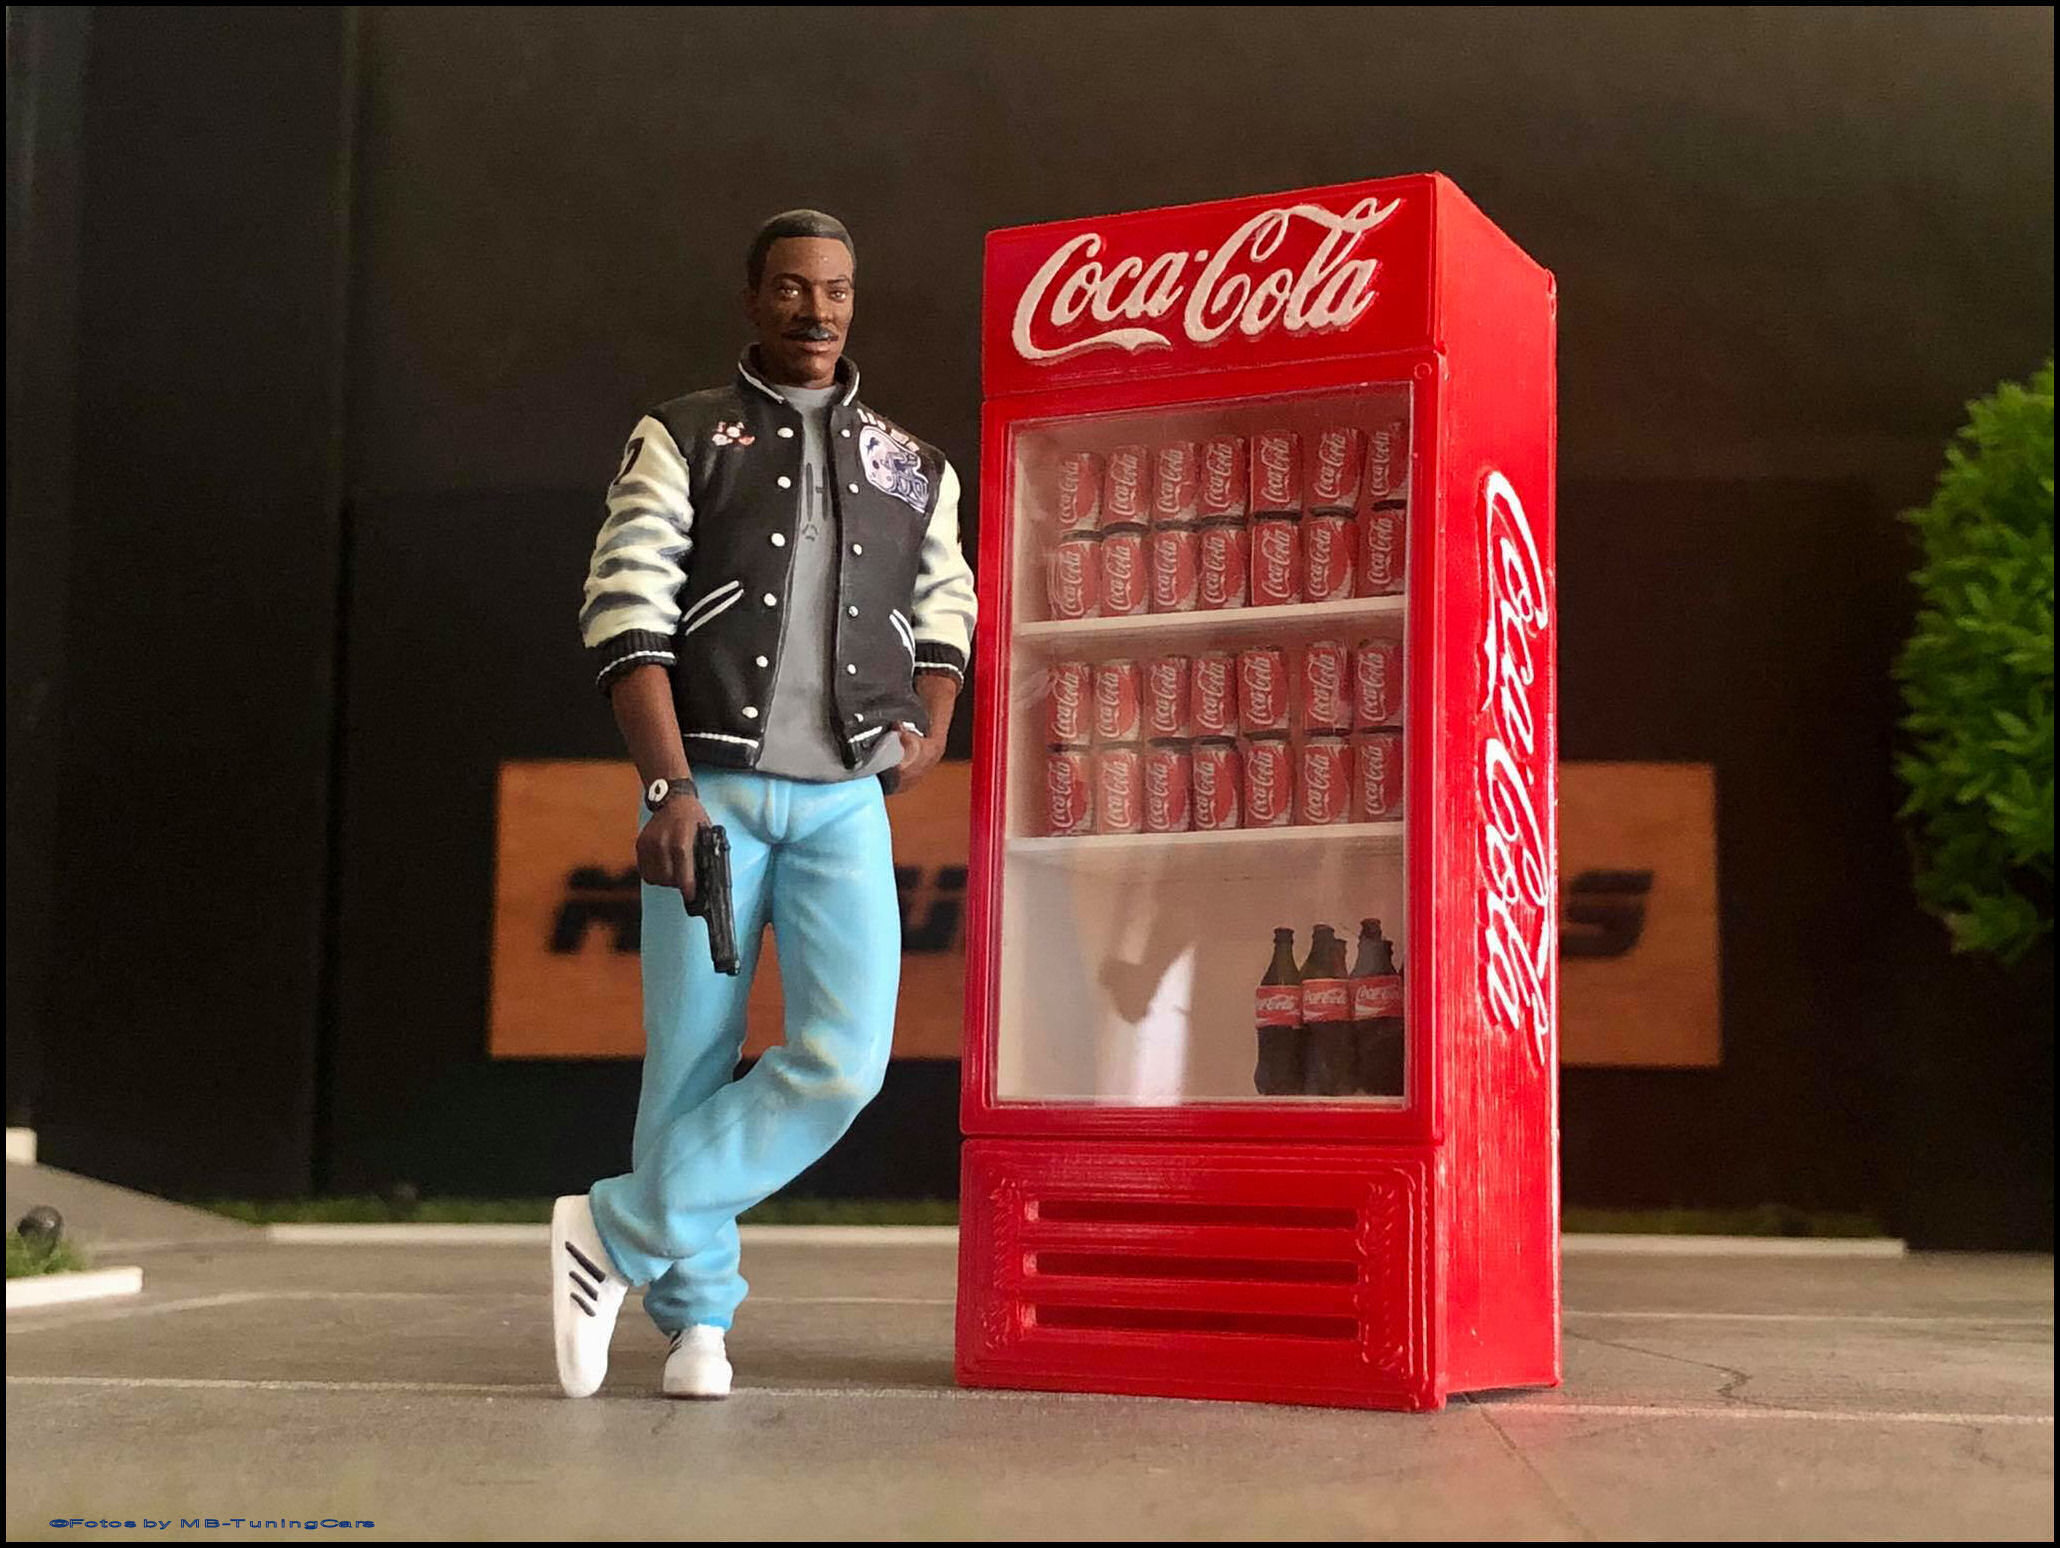 MB-TuningCars - 1:18 Kühlschrank Coca Cola lackiert - Diorama